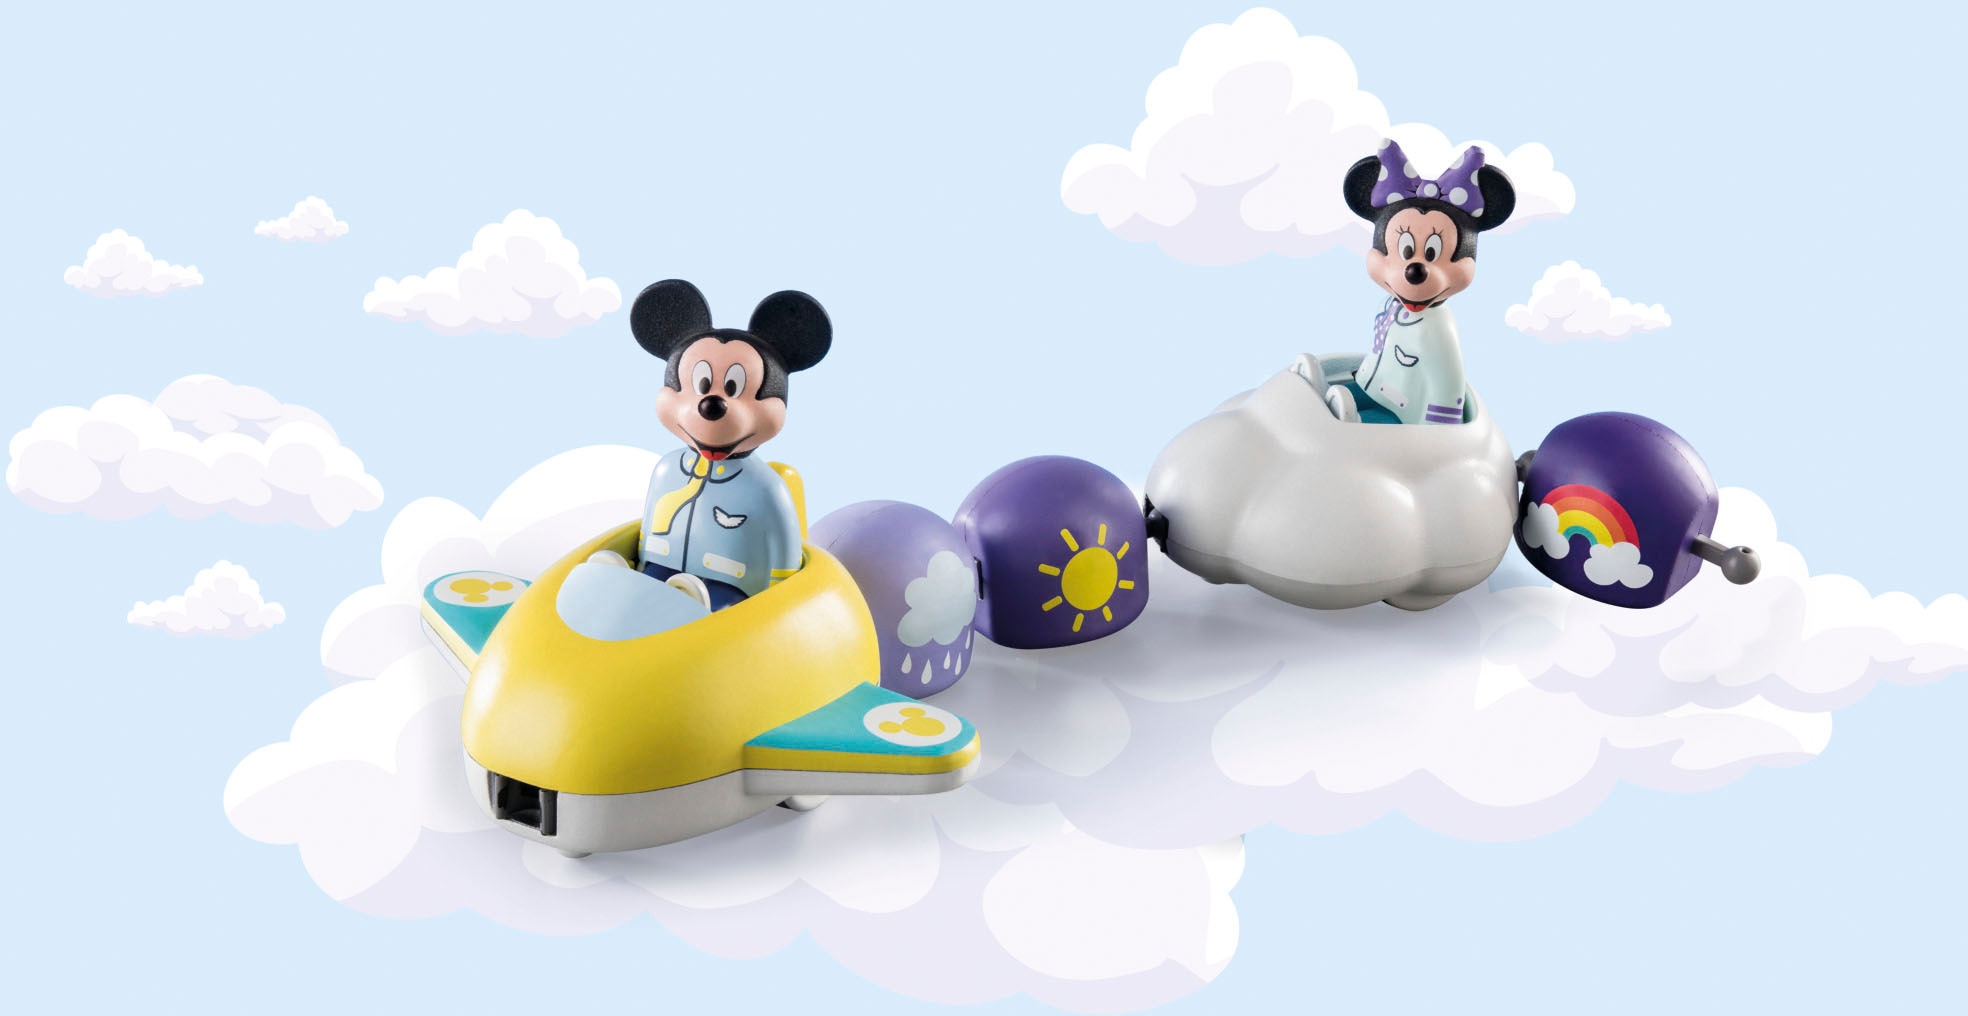 Playmobil® Konstruktions-Spielset »Mickys & Minnies Wolkenflug (71320), Playmobil 1-2-3«, (7 St.), Made in Europe